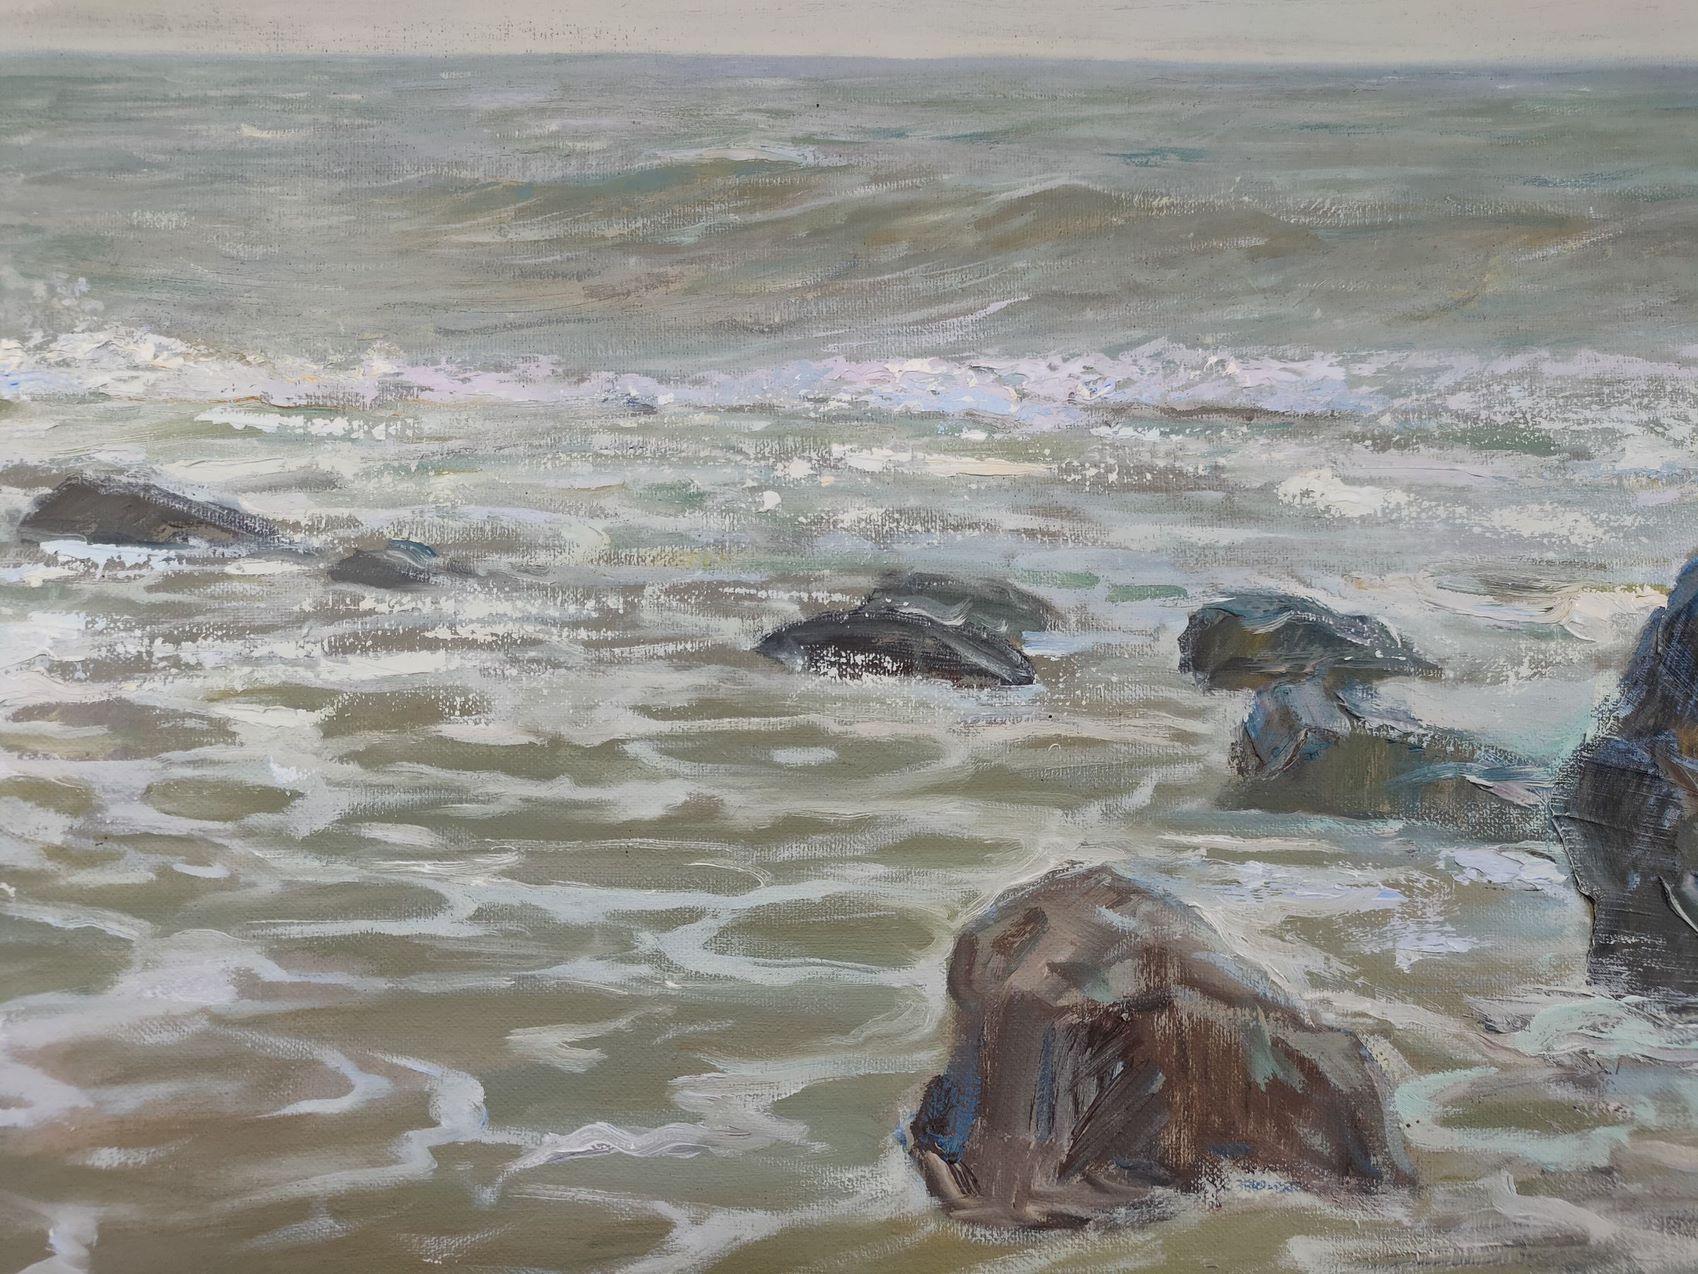 Artist: Mishurovski V.V.
Work: Original oil painting, handmade artwork, one of a kind 
Medium: Oil on Canvas
Style: Impressionism
Year: 2008
Title: Sea shore Azure
Size: 19.5